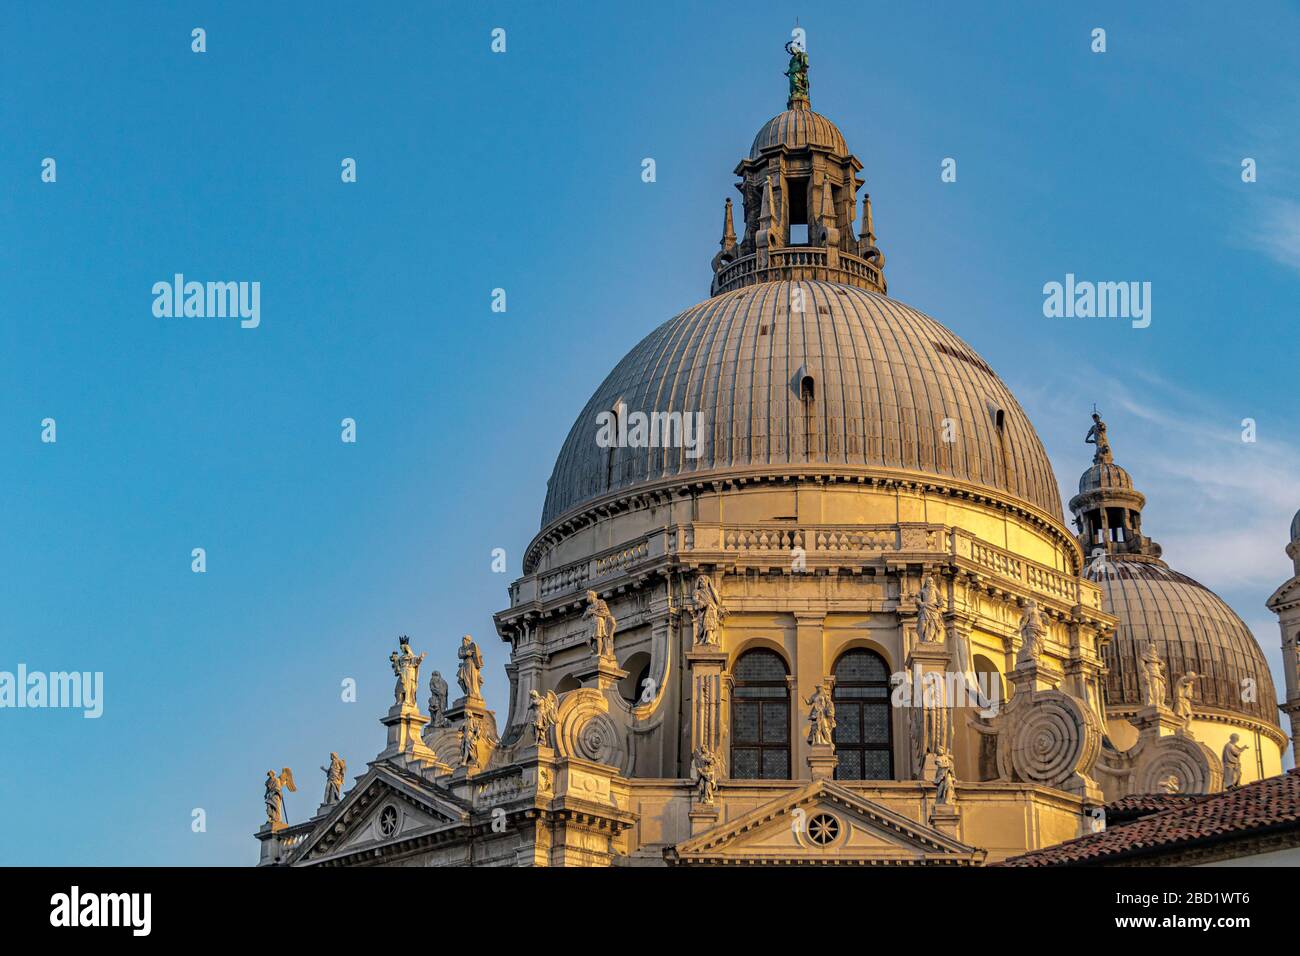 Le dôme de la basilique Santa Maria della Salute situé à Punta della Dogana dans le quartier Dorsoduro de Venise, Italie Banque D'Images